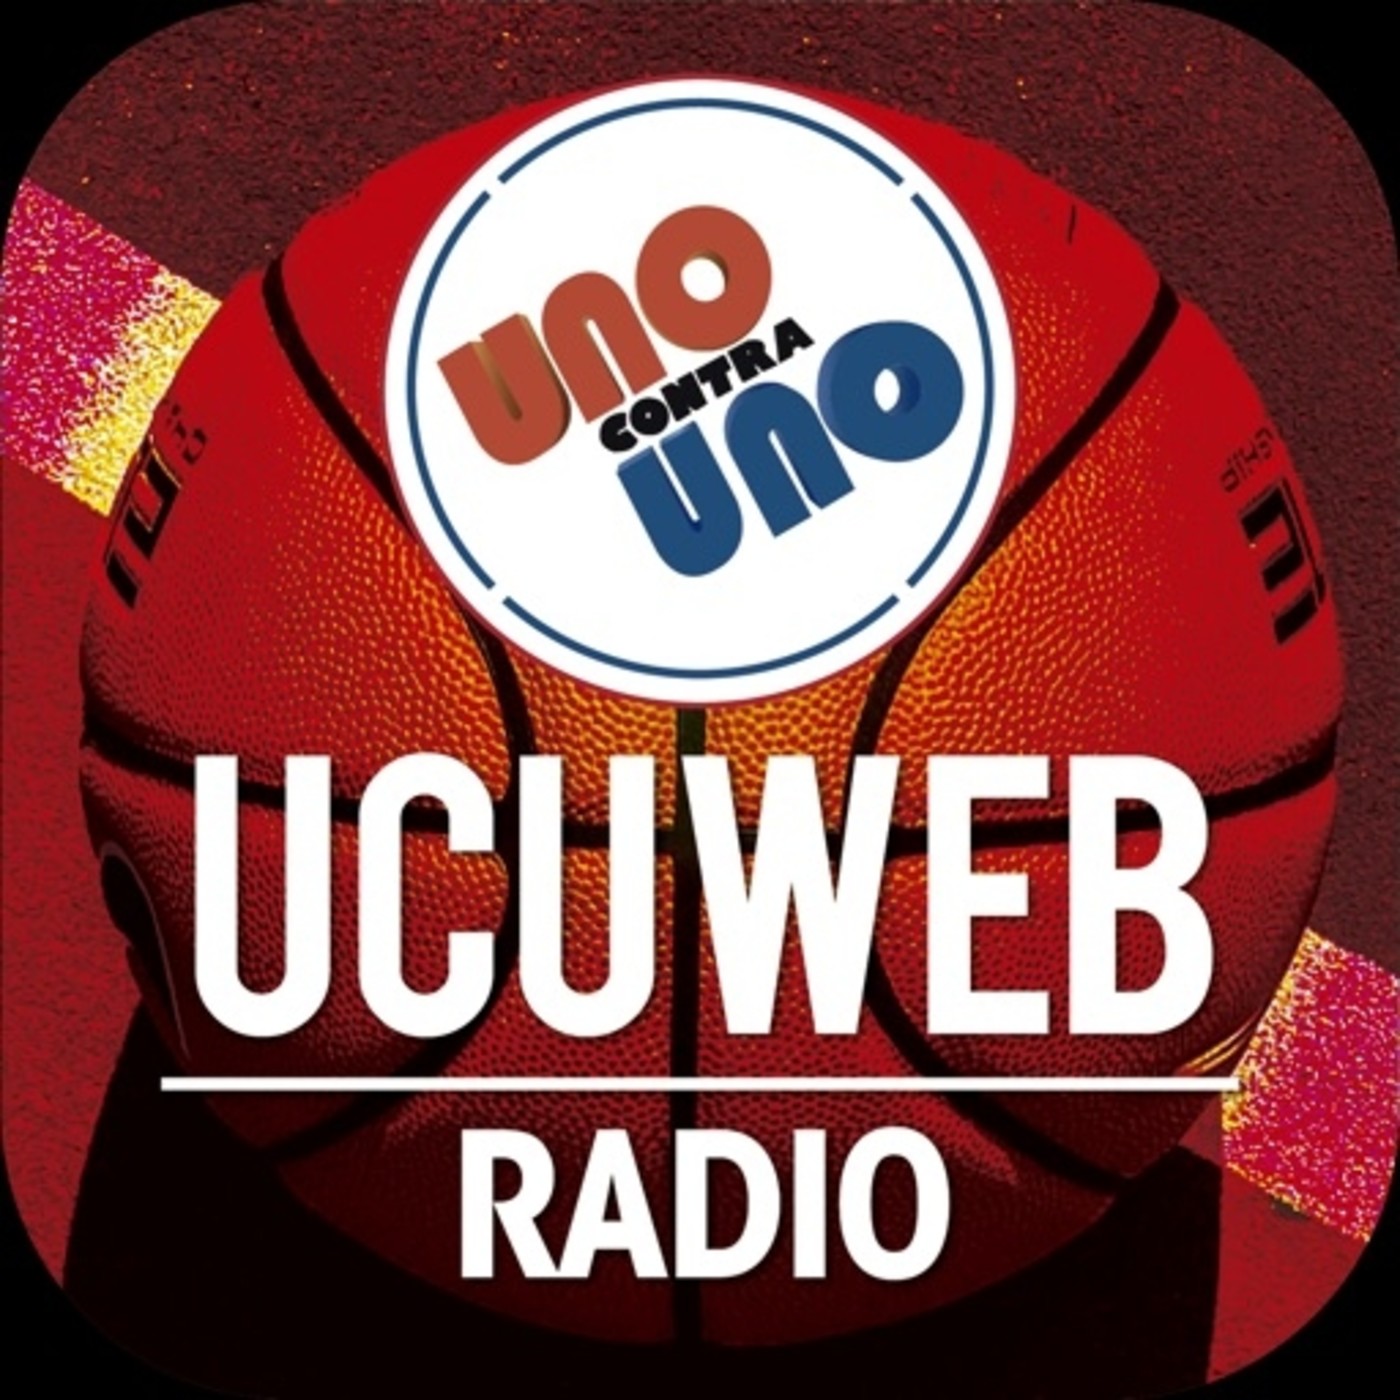 UcU Web Radio